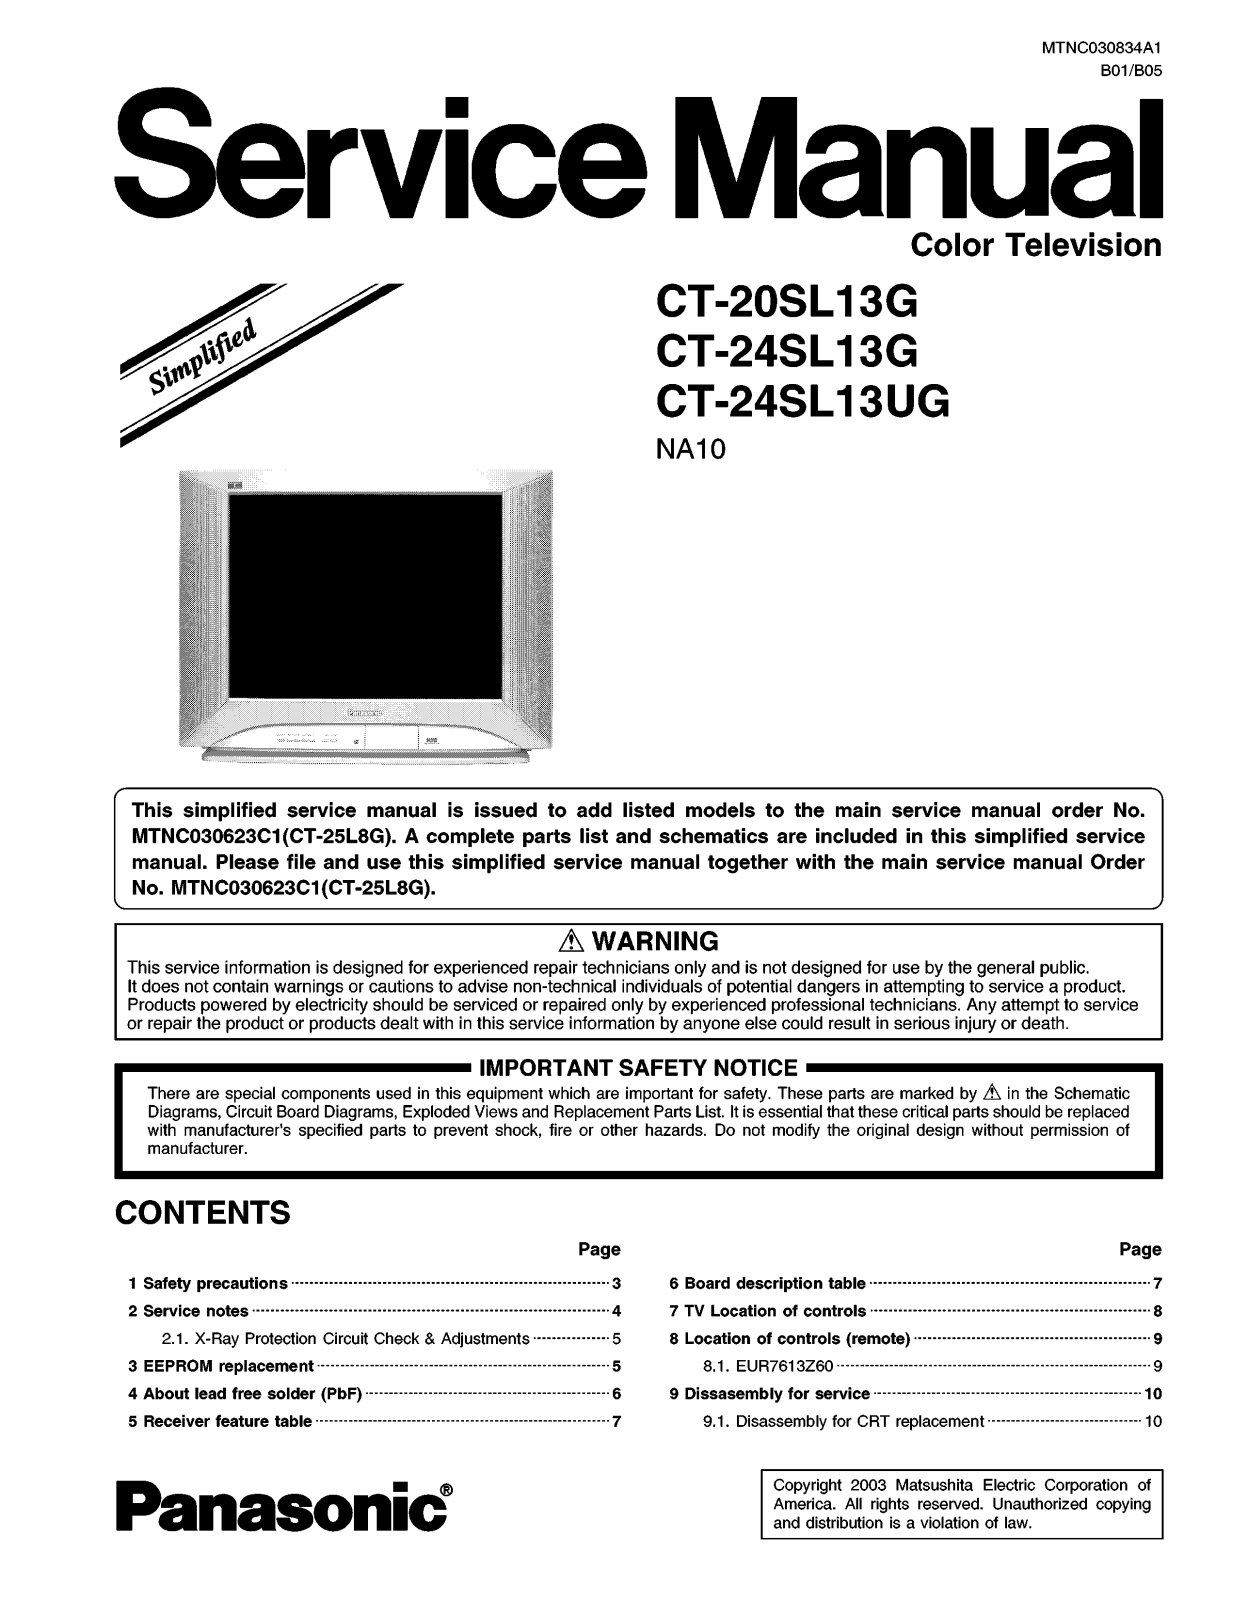 Panasonic CT-20SL13G, ct-20sl13w Service Manual